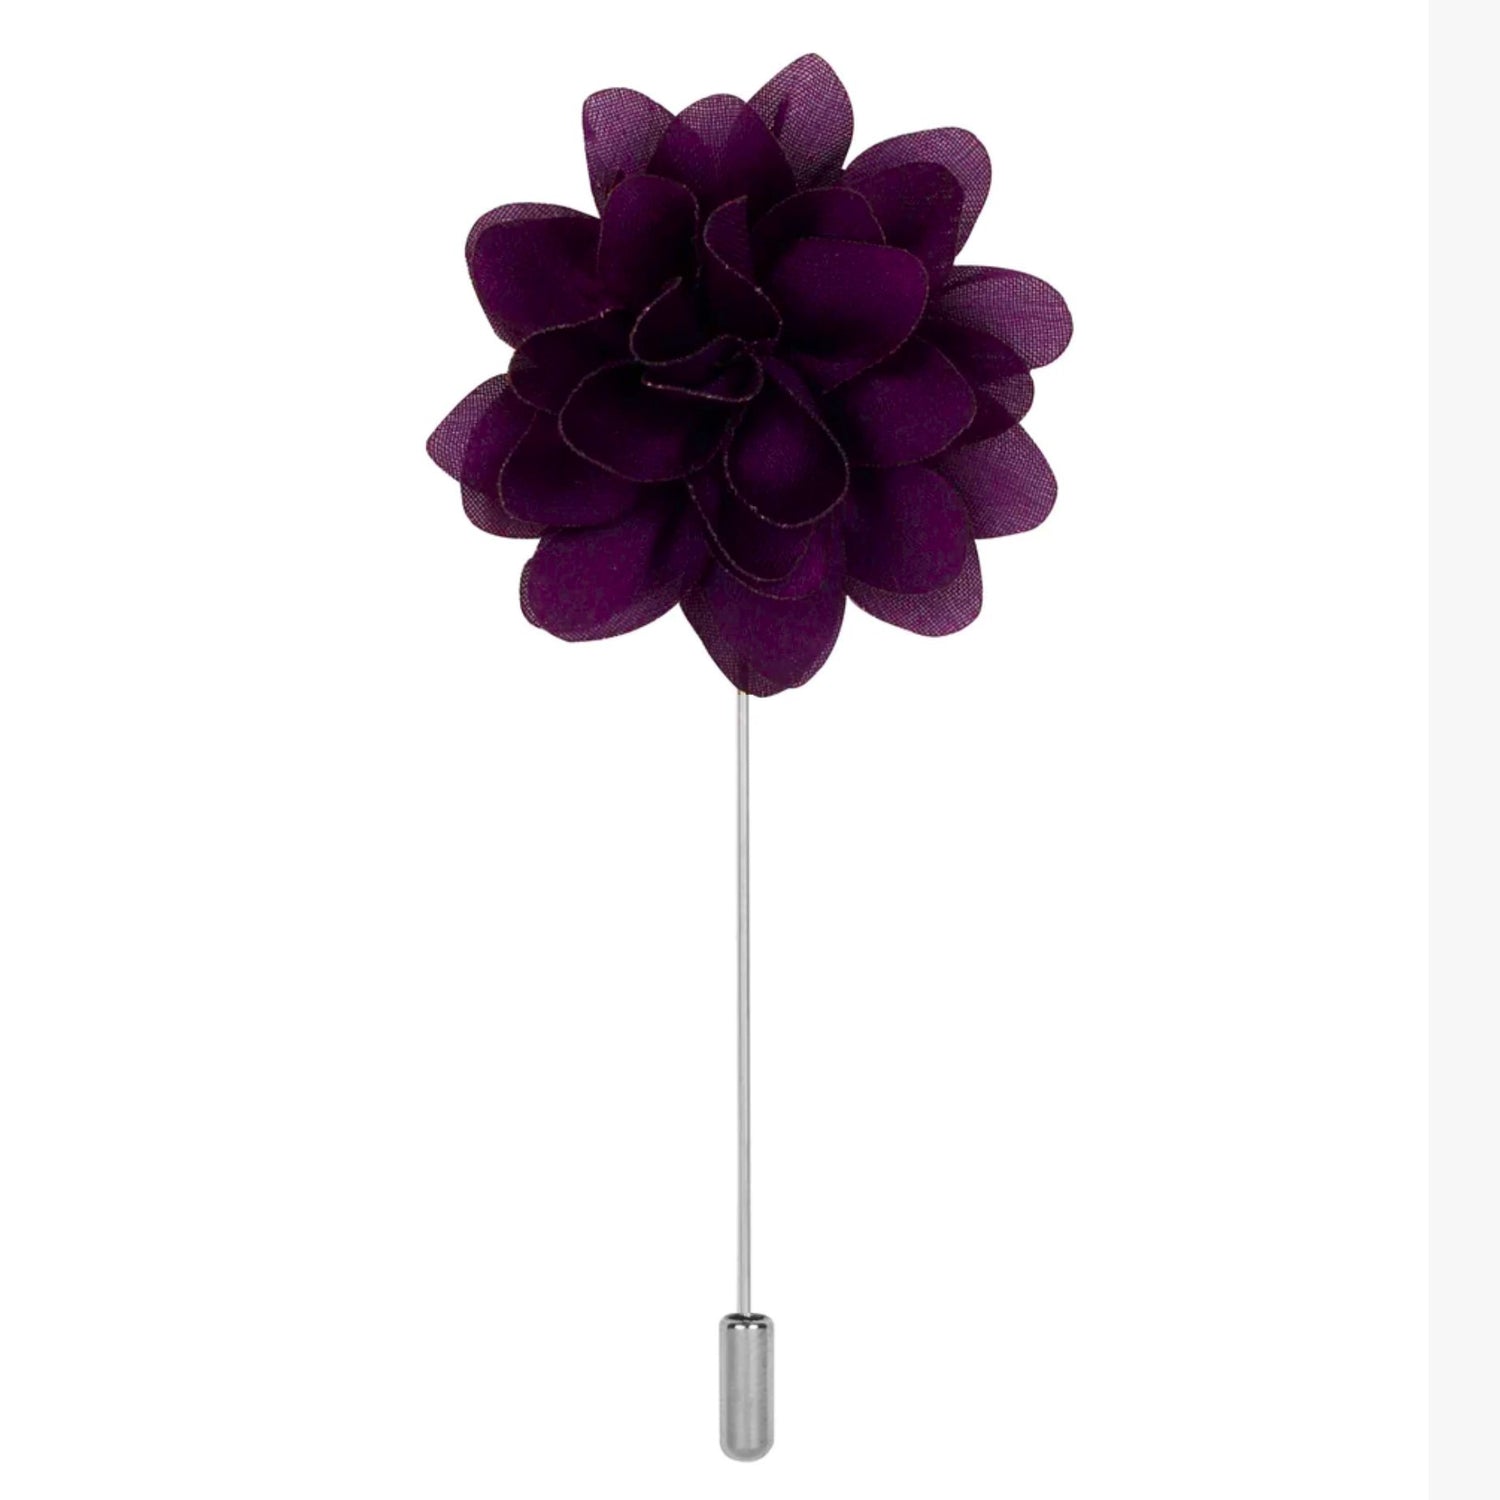 Main View: A Purple Color Star Flower Shaped Lapel Pin||Purple